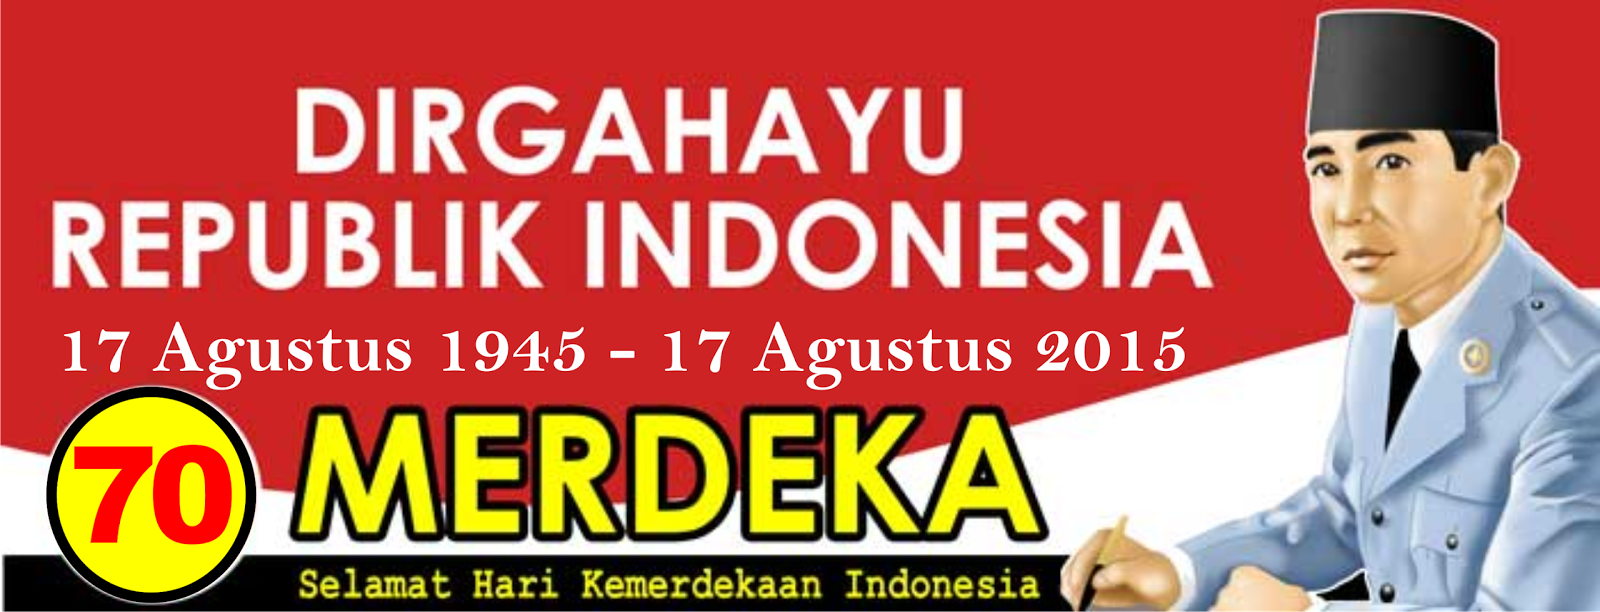 Contoh Desain Spanduk HUT Kemerdekaan Indonesia ke 70 